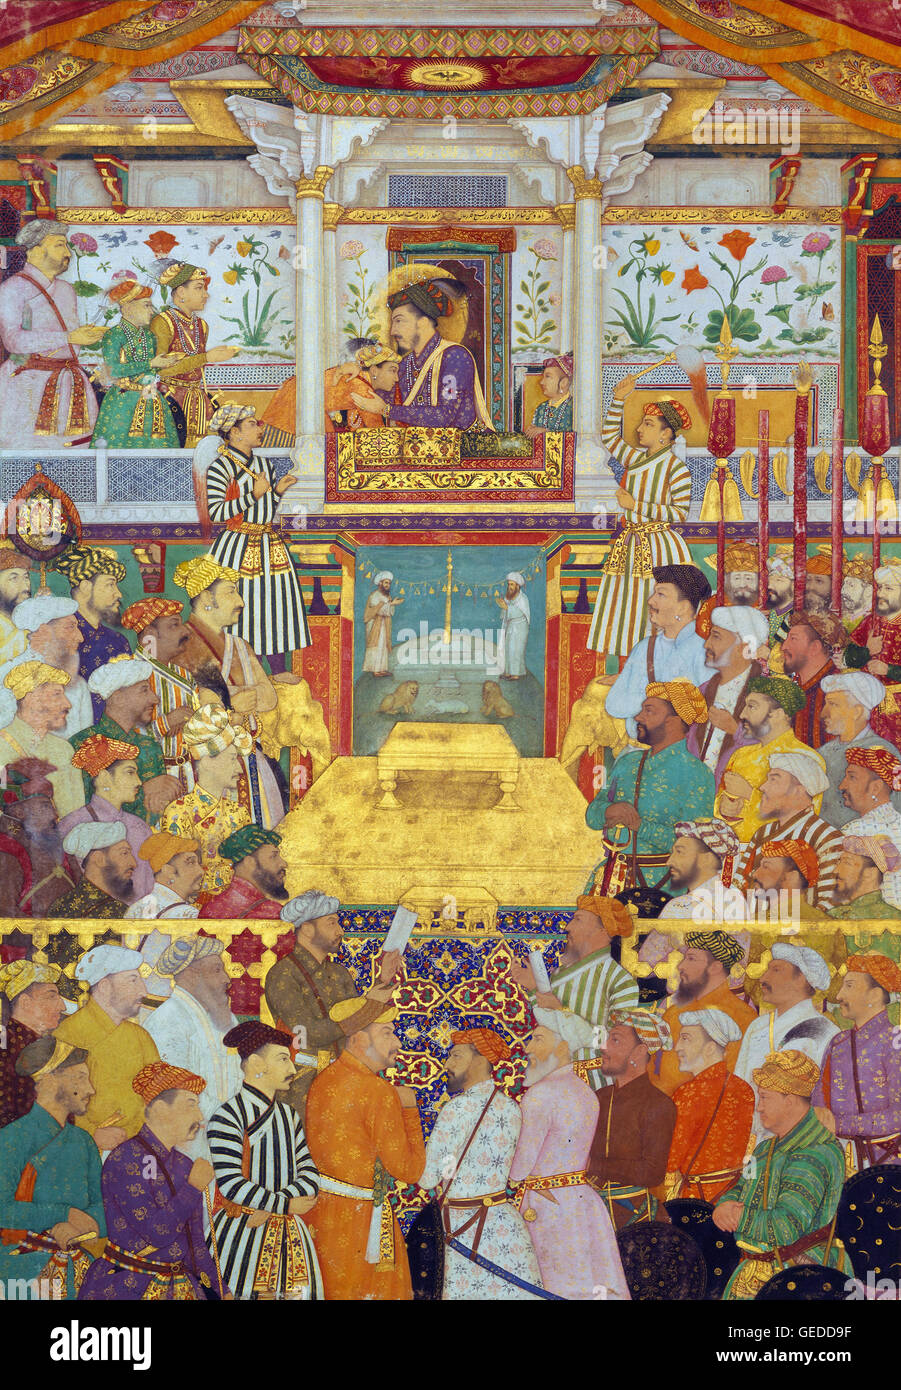 Bichitr - piastra Padshahnama 10 - Shah-Jahan riceve i suoi tre figli maggiori e di Asaf Khan Foto Stock